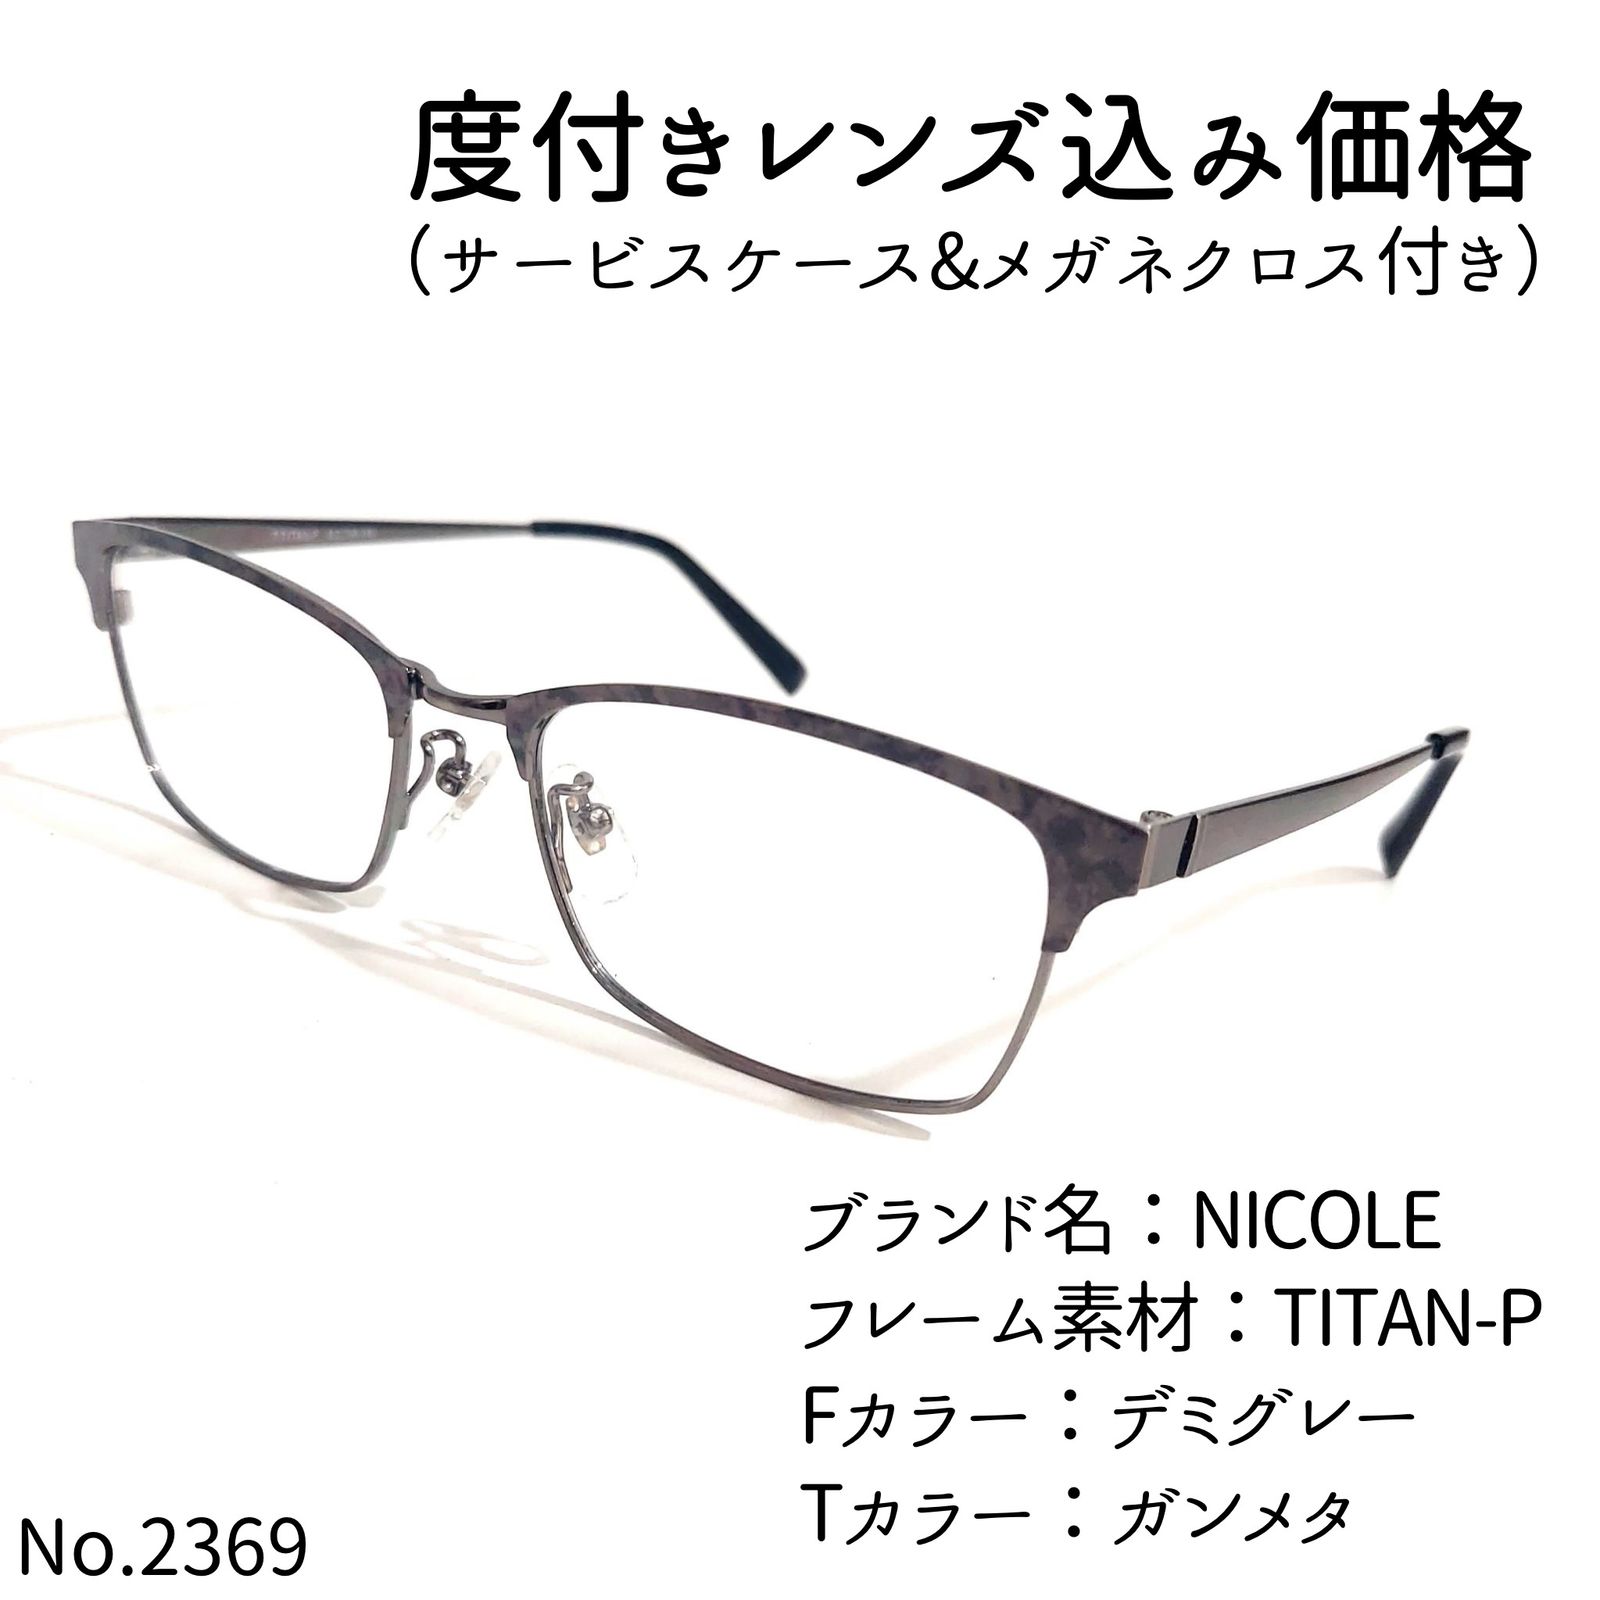 No.2369+メガネ NICOLE【度数入り込み価格】-